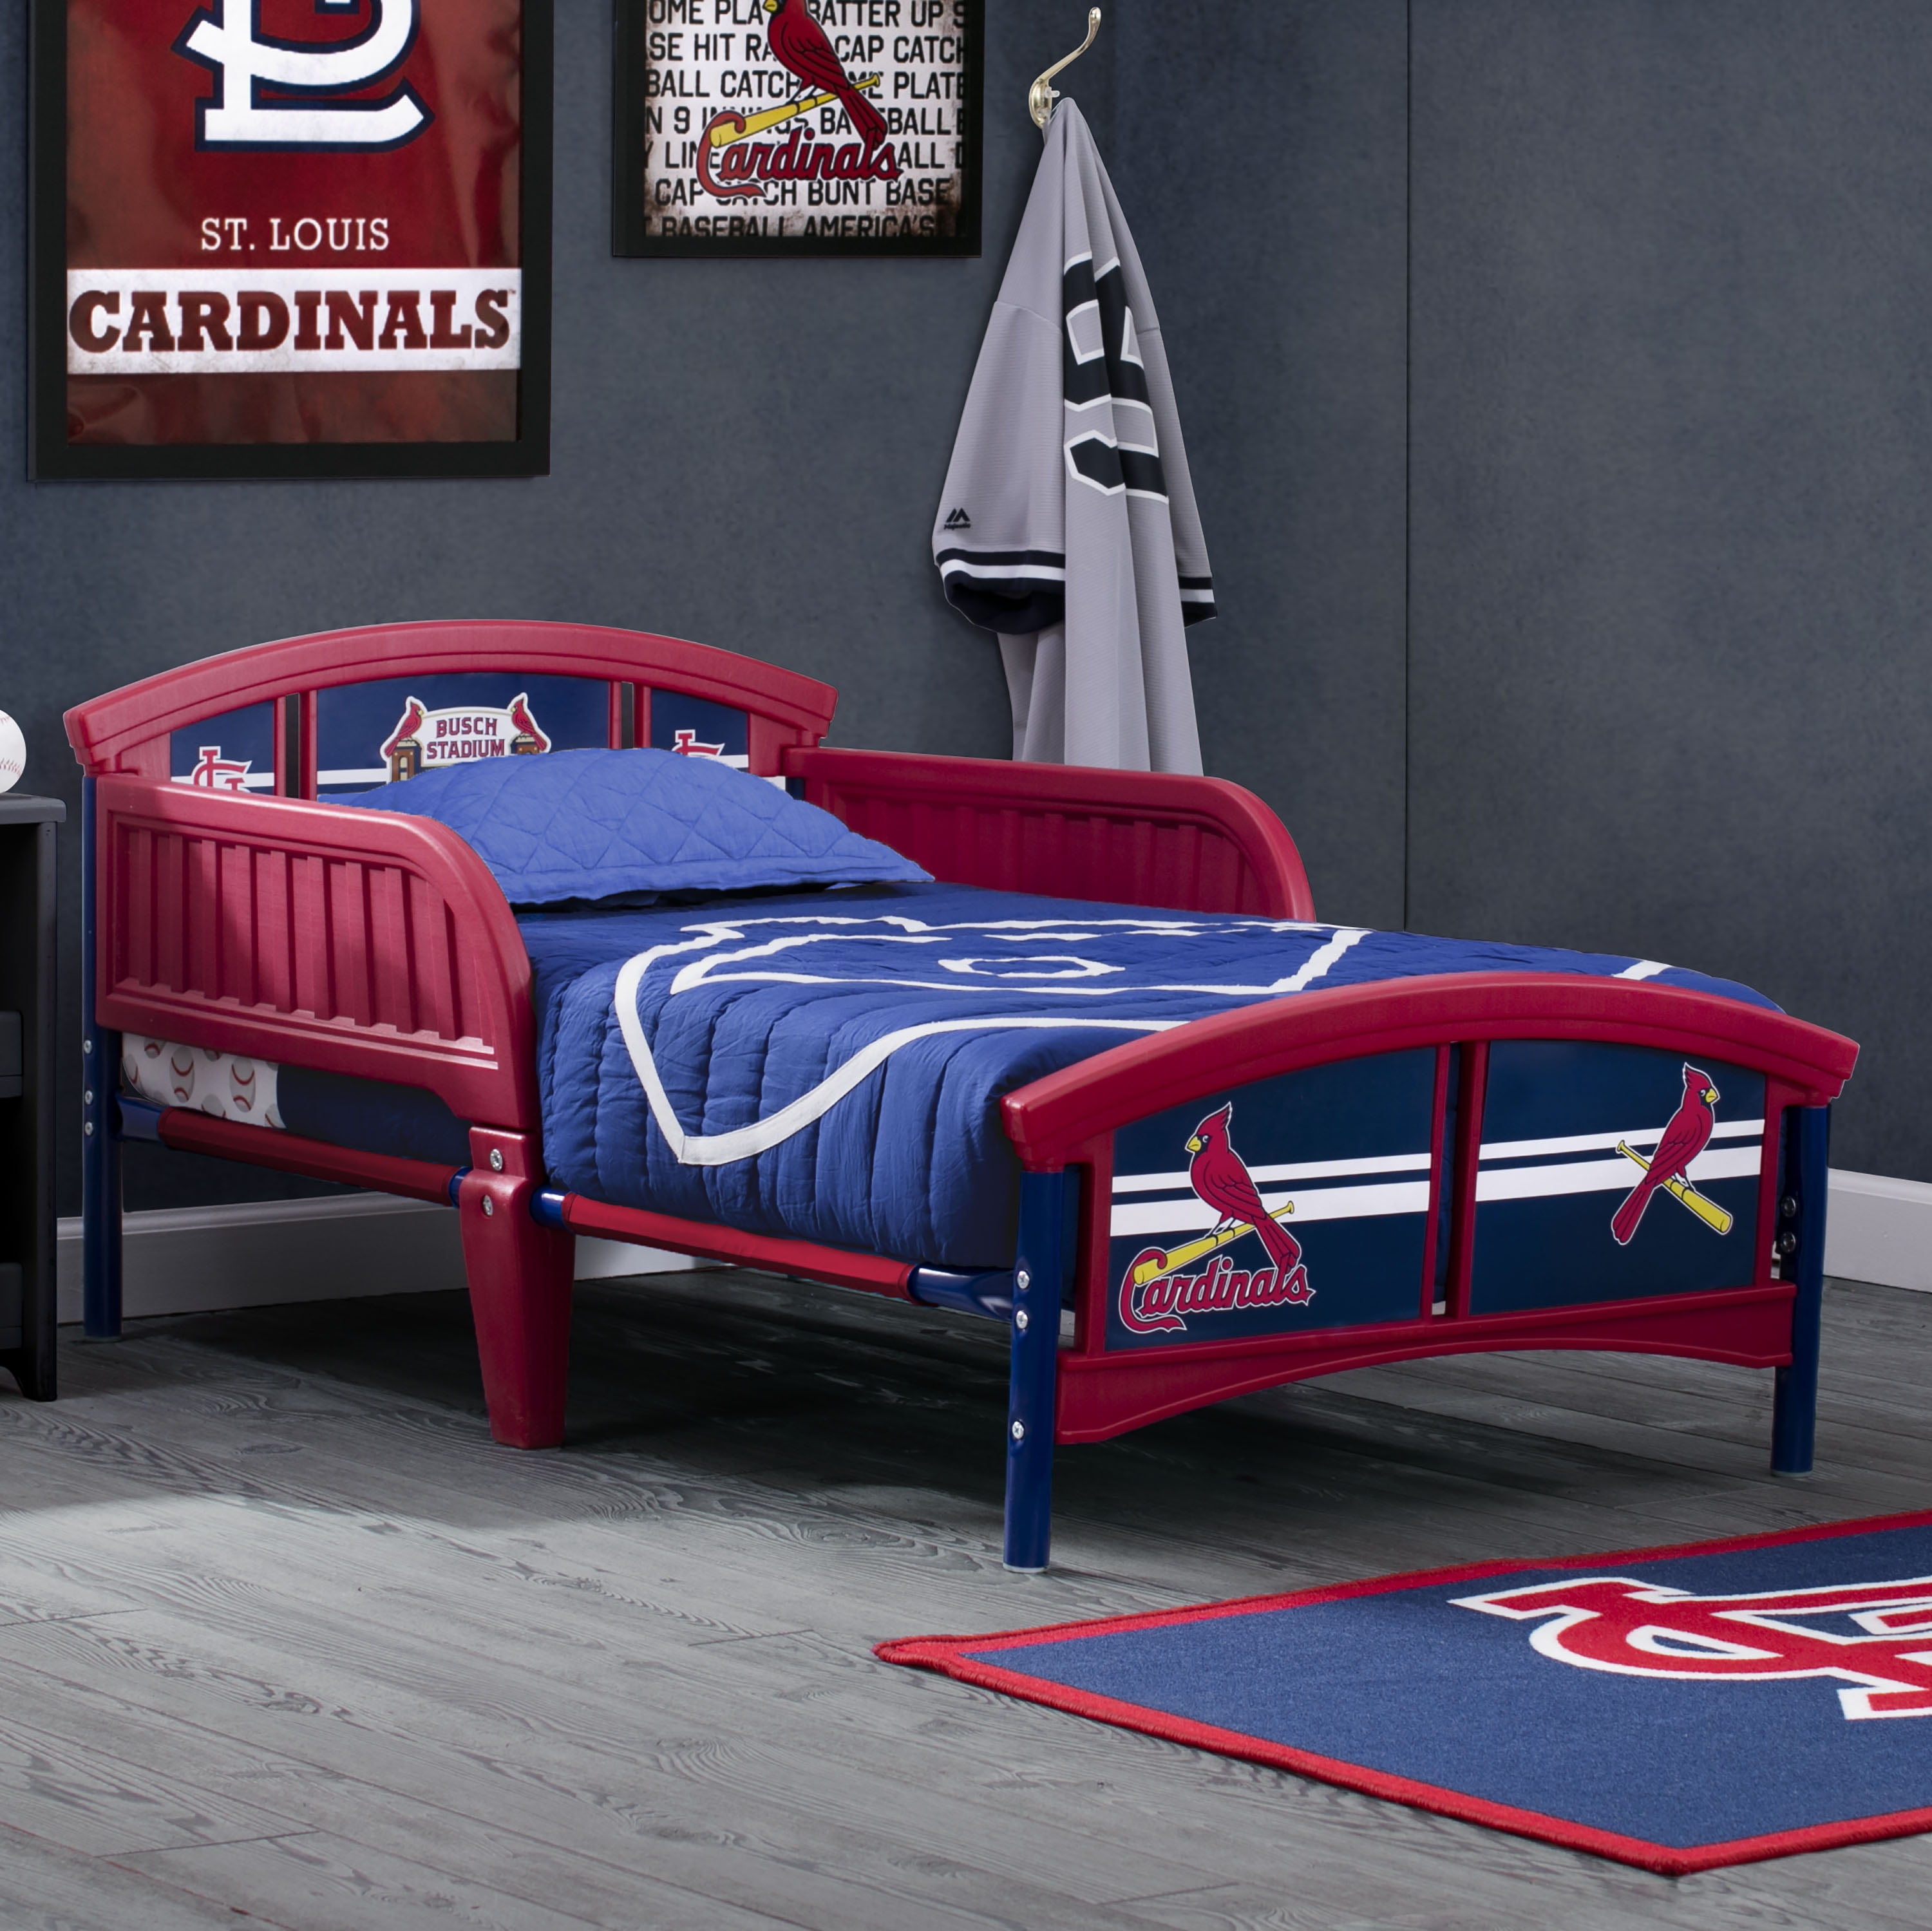 St. Louis Cardinals Plastic Toddler Bed 